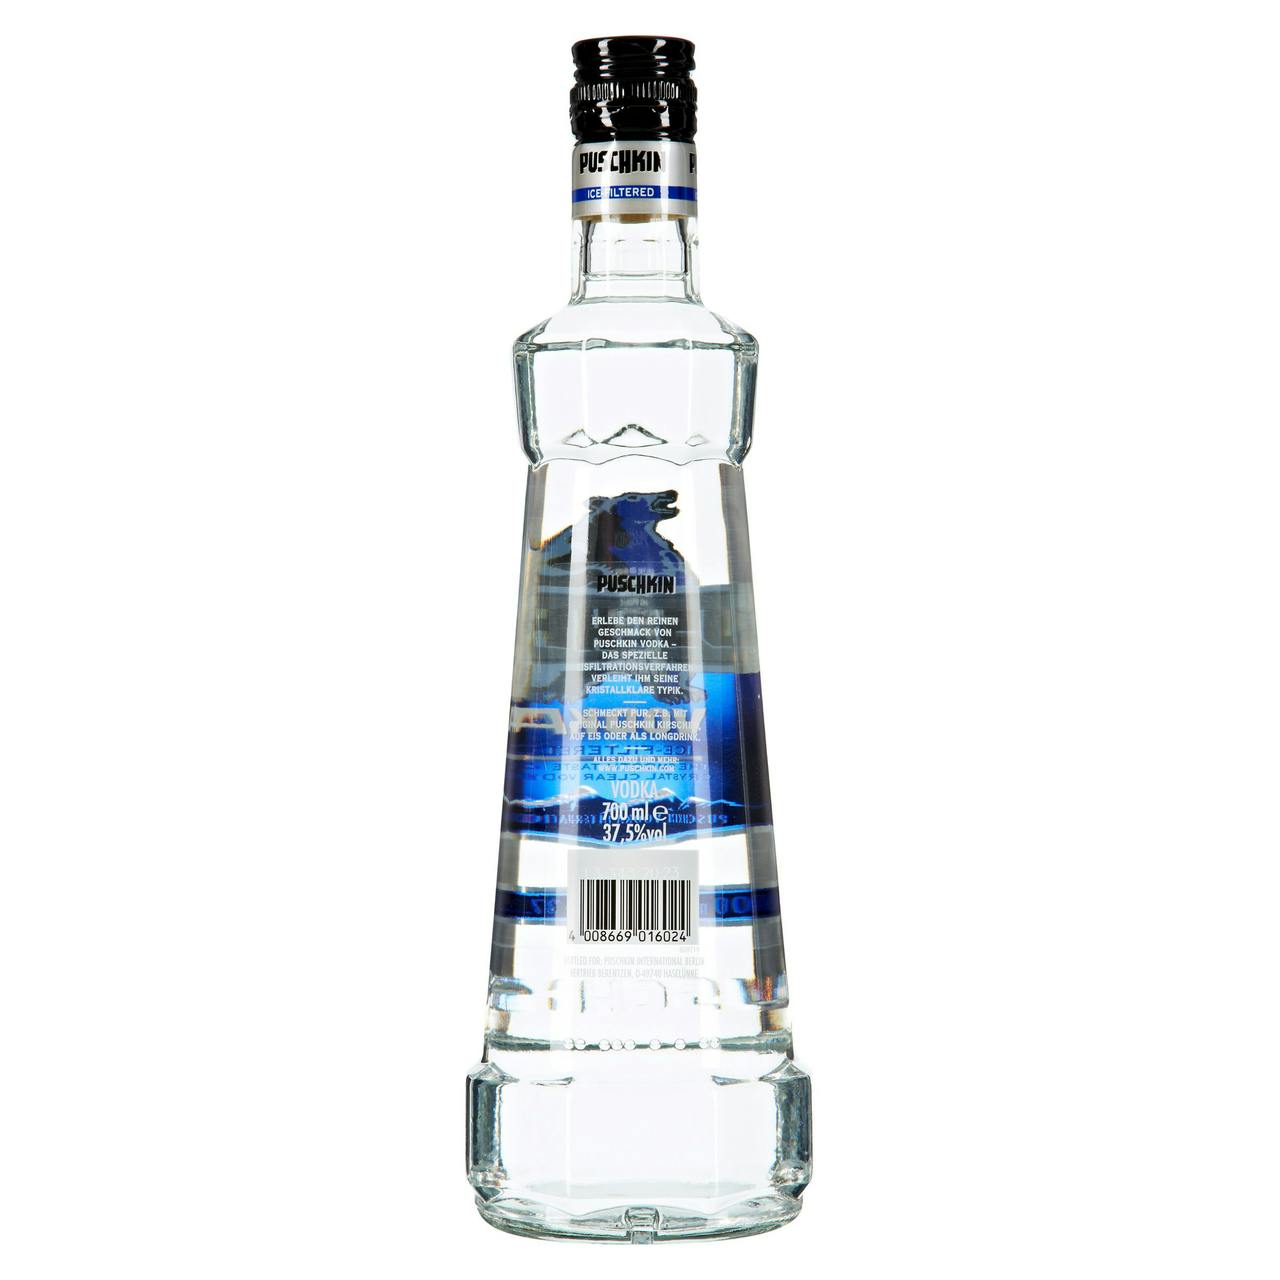 Marktplatz % 6 (4,2 x l Vodka Puschkin | Vol. Flaschen 37,5 0,7 l) METRO